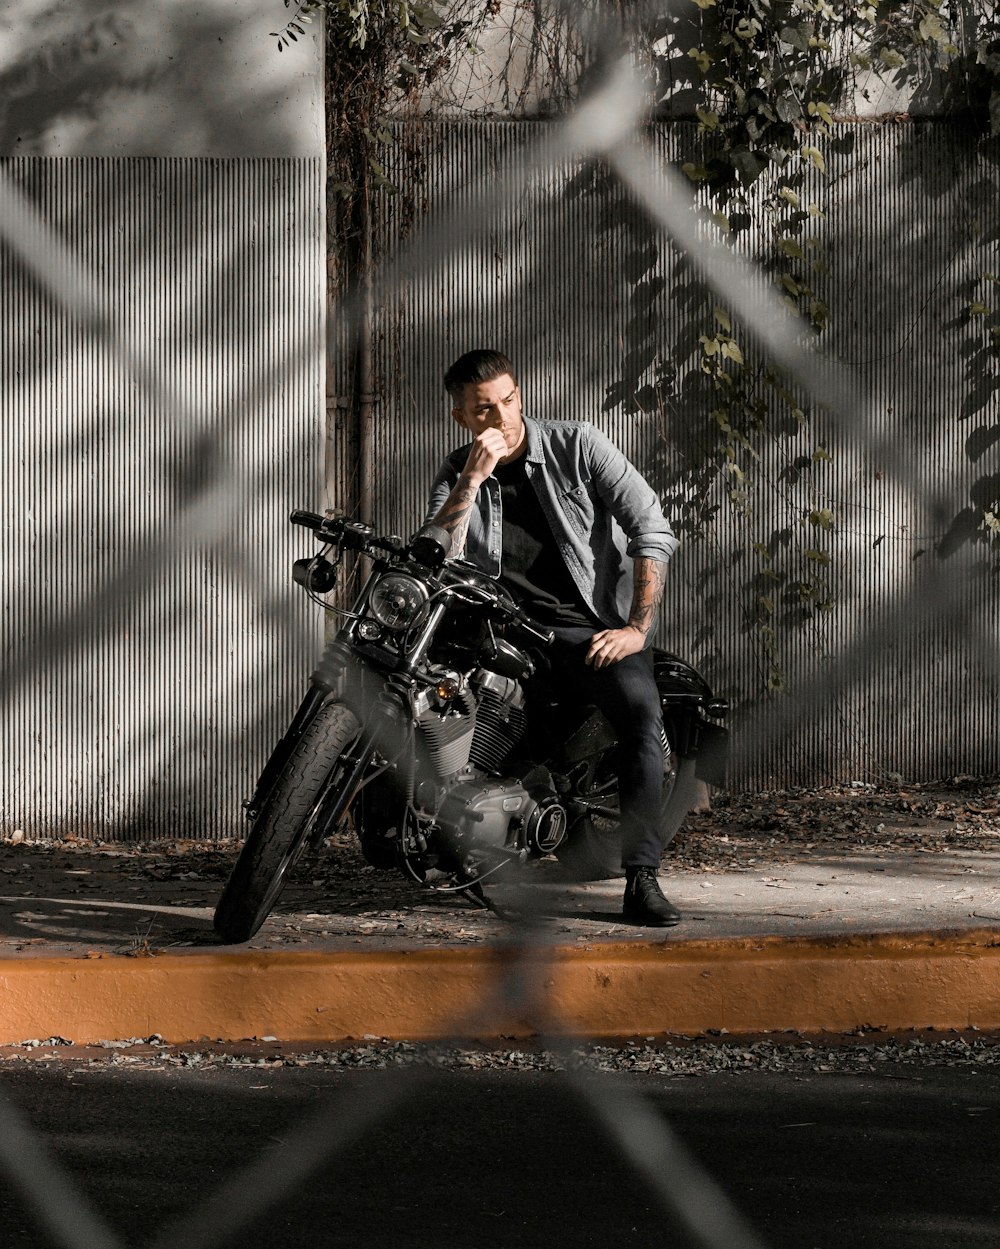 man in gray dress shirt riding black motorcycle